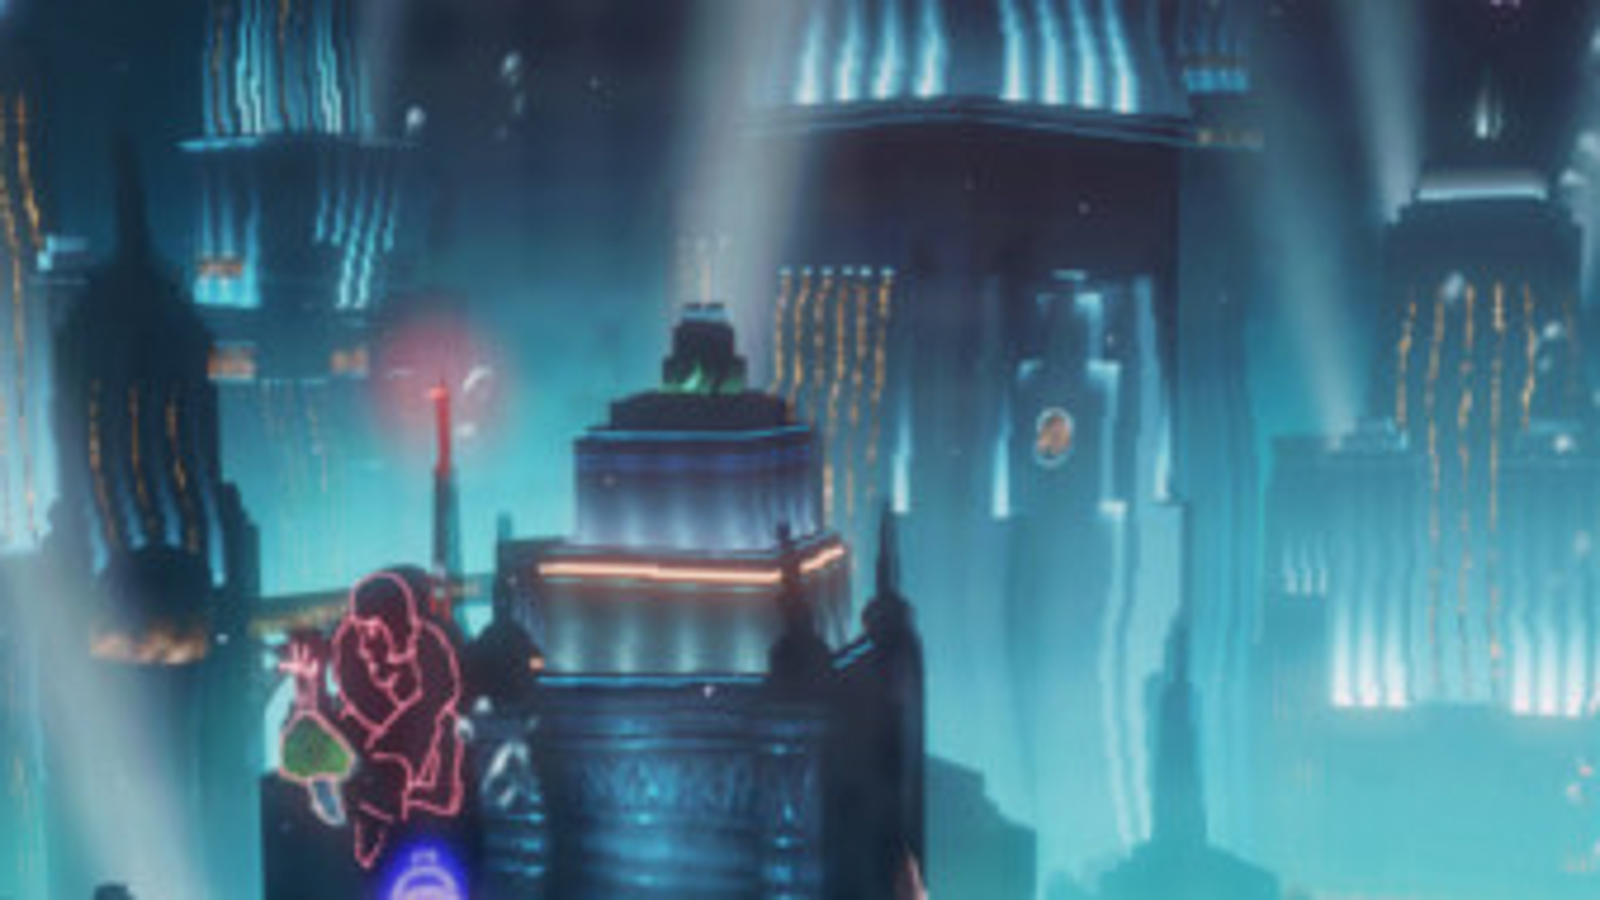 Future BioShock Infinite DLC will take you back to Rapture